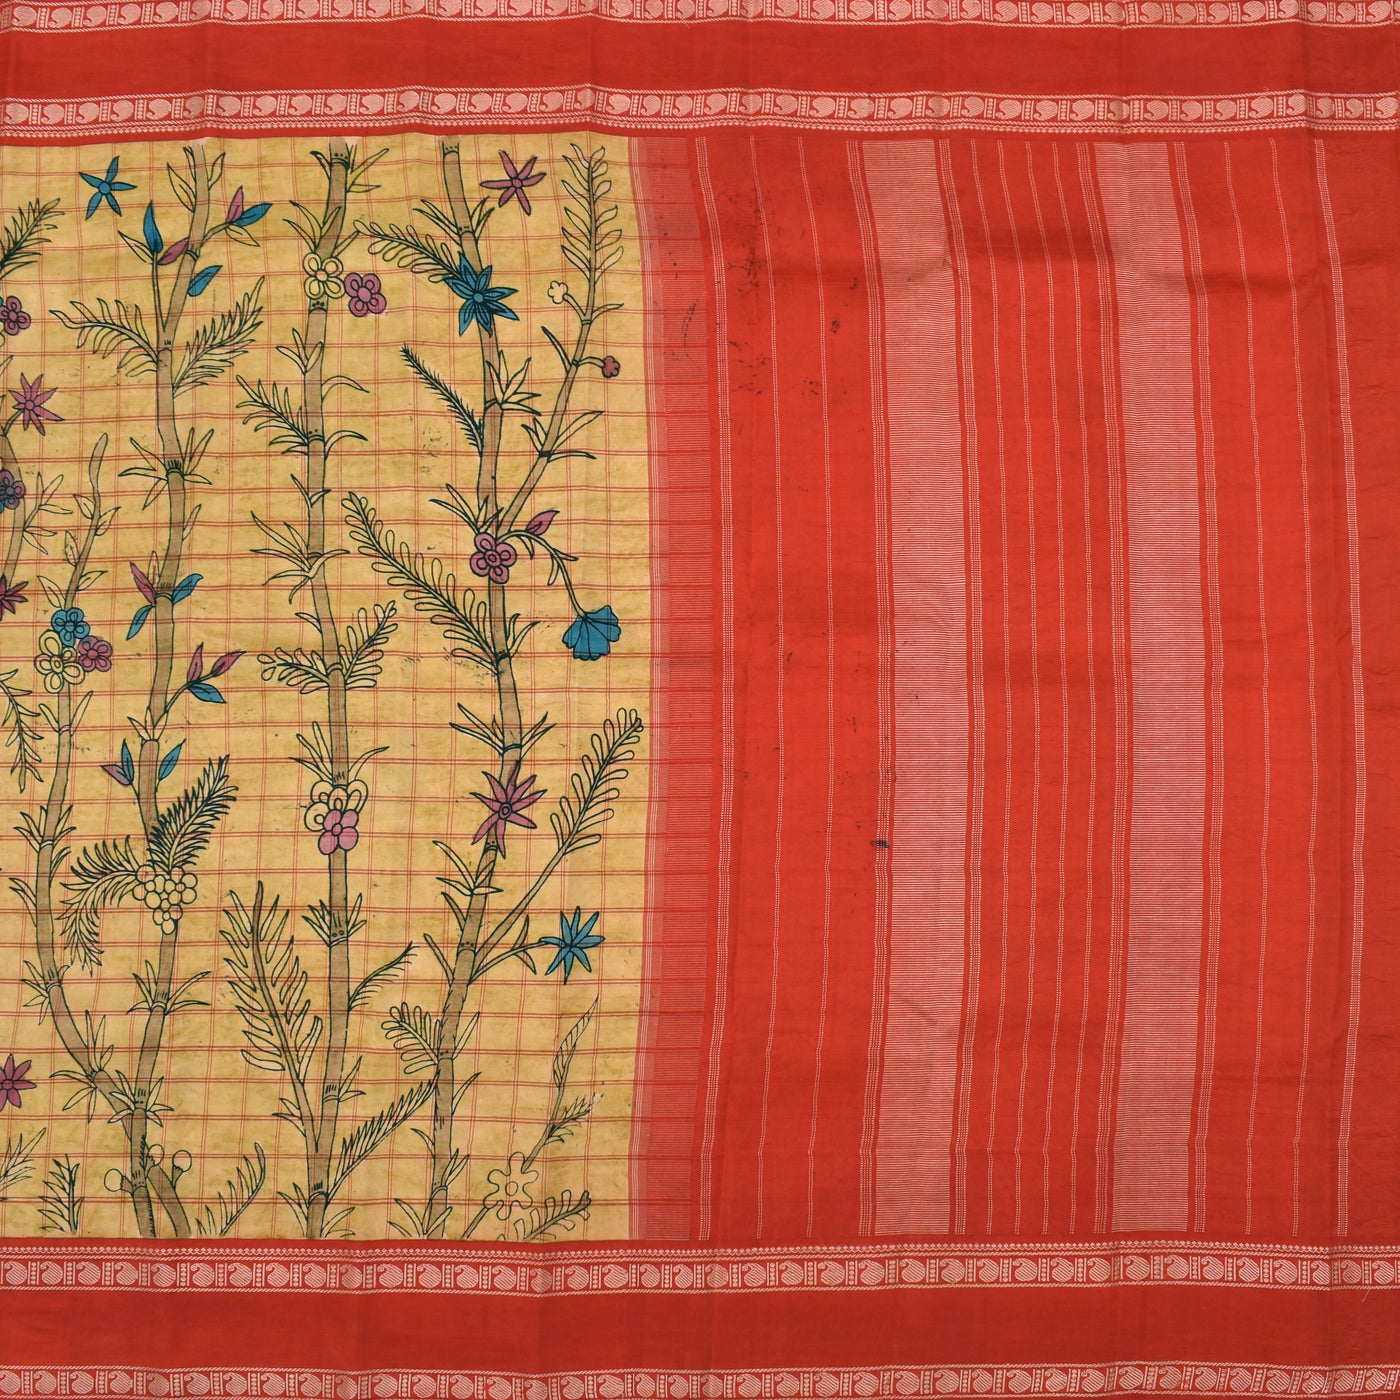 Off White and Yellow Pen Kalamkari Silk Saree with Floral Checks Design